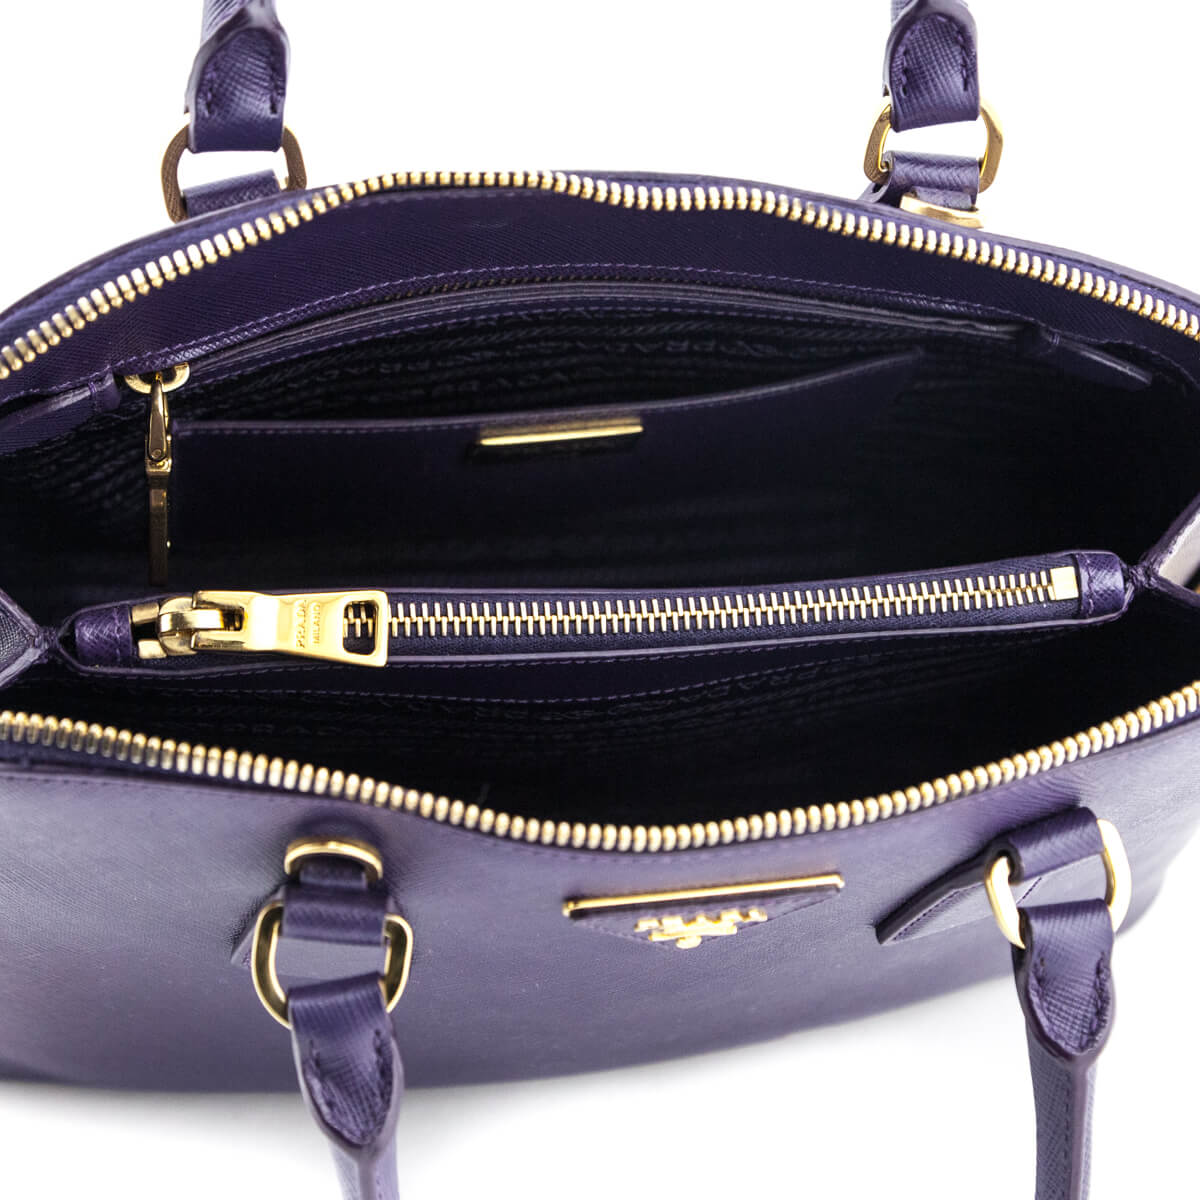 Prada Purple Saffiano Lux Leather Medium Double Zip Tote Bag Prada